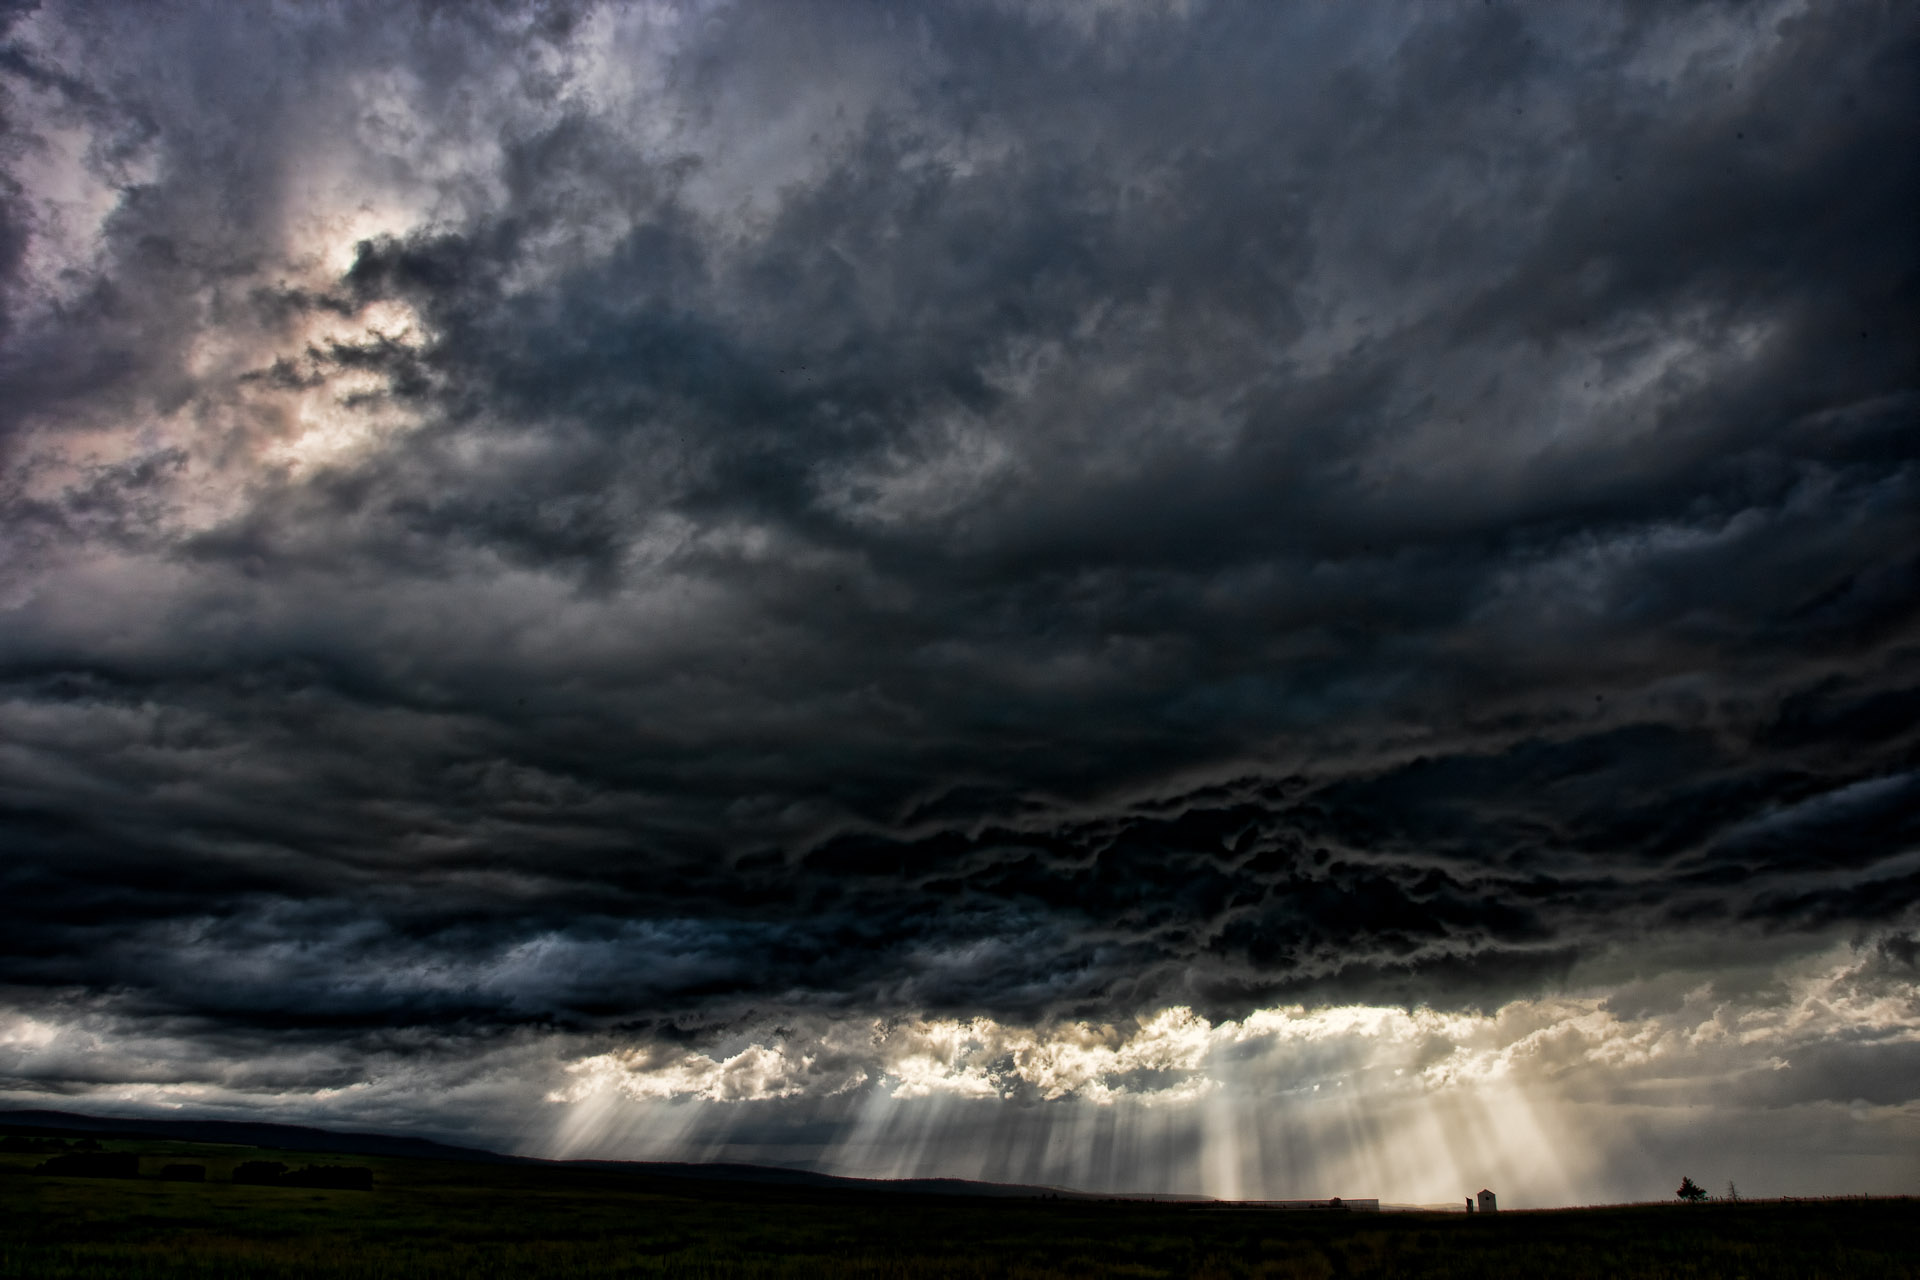 Prairie Storm Dark Clouds Heavy Rain And A Lightning Strike